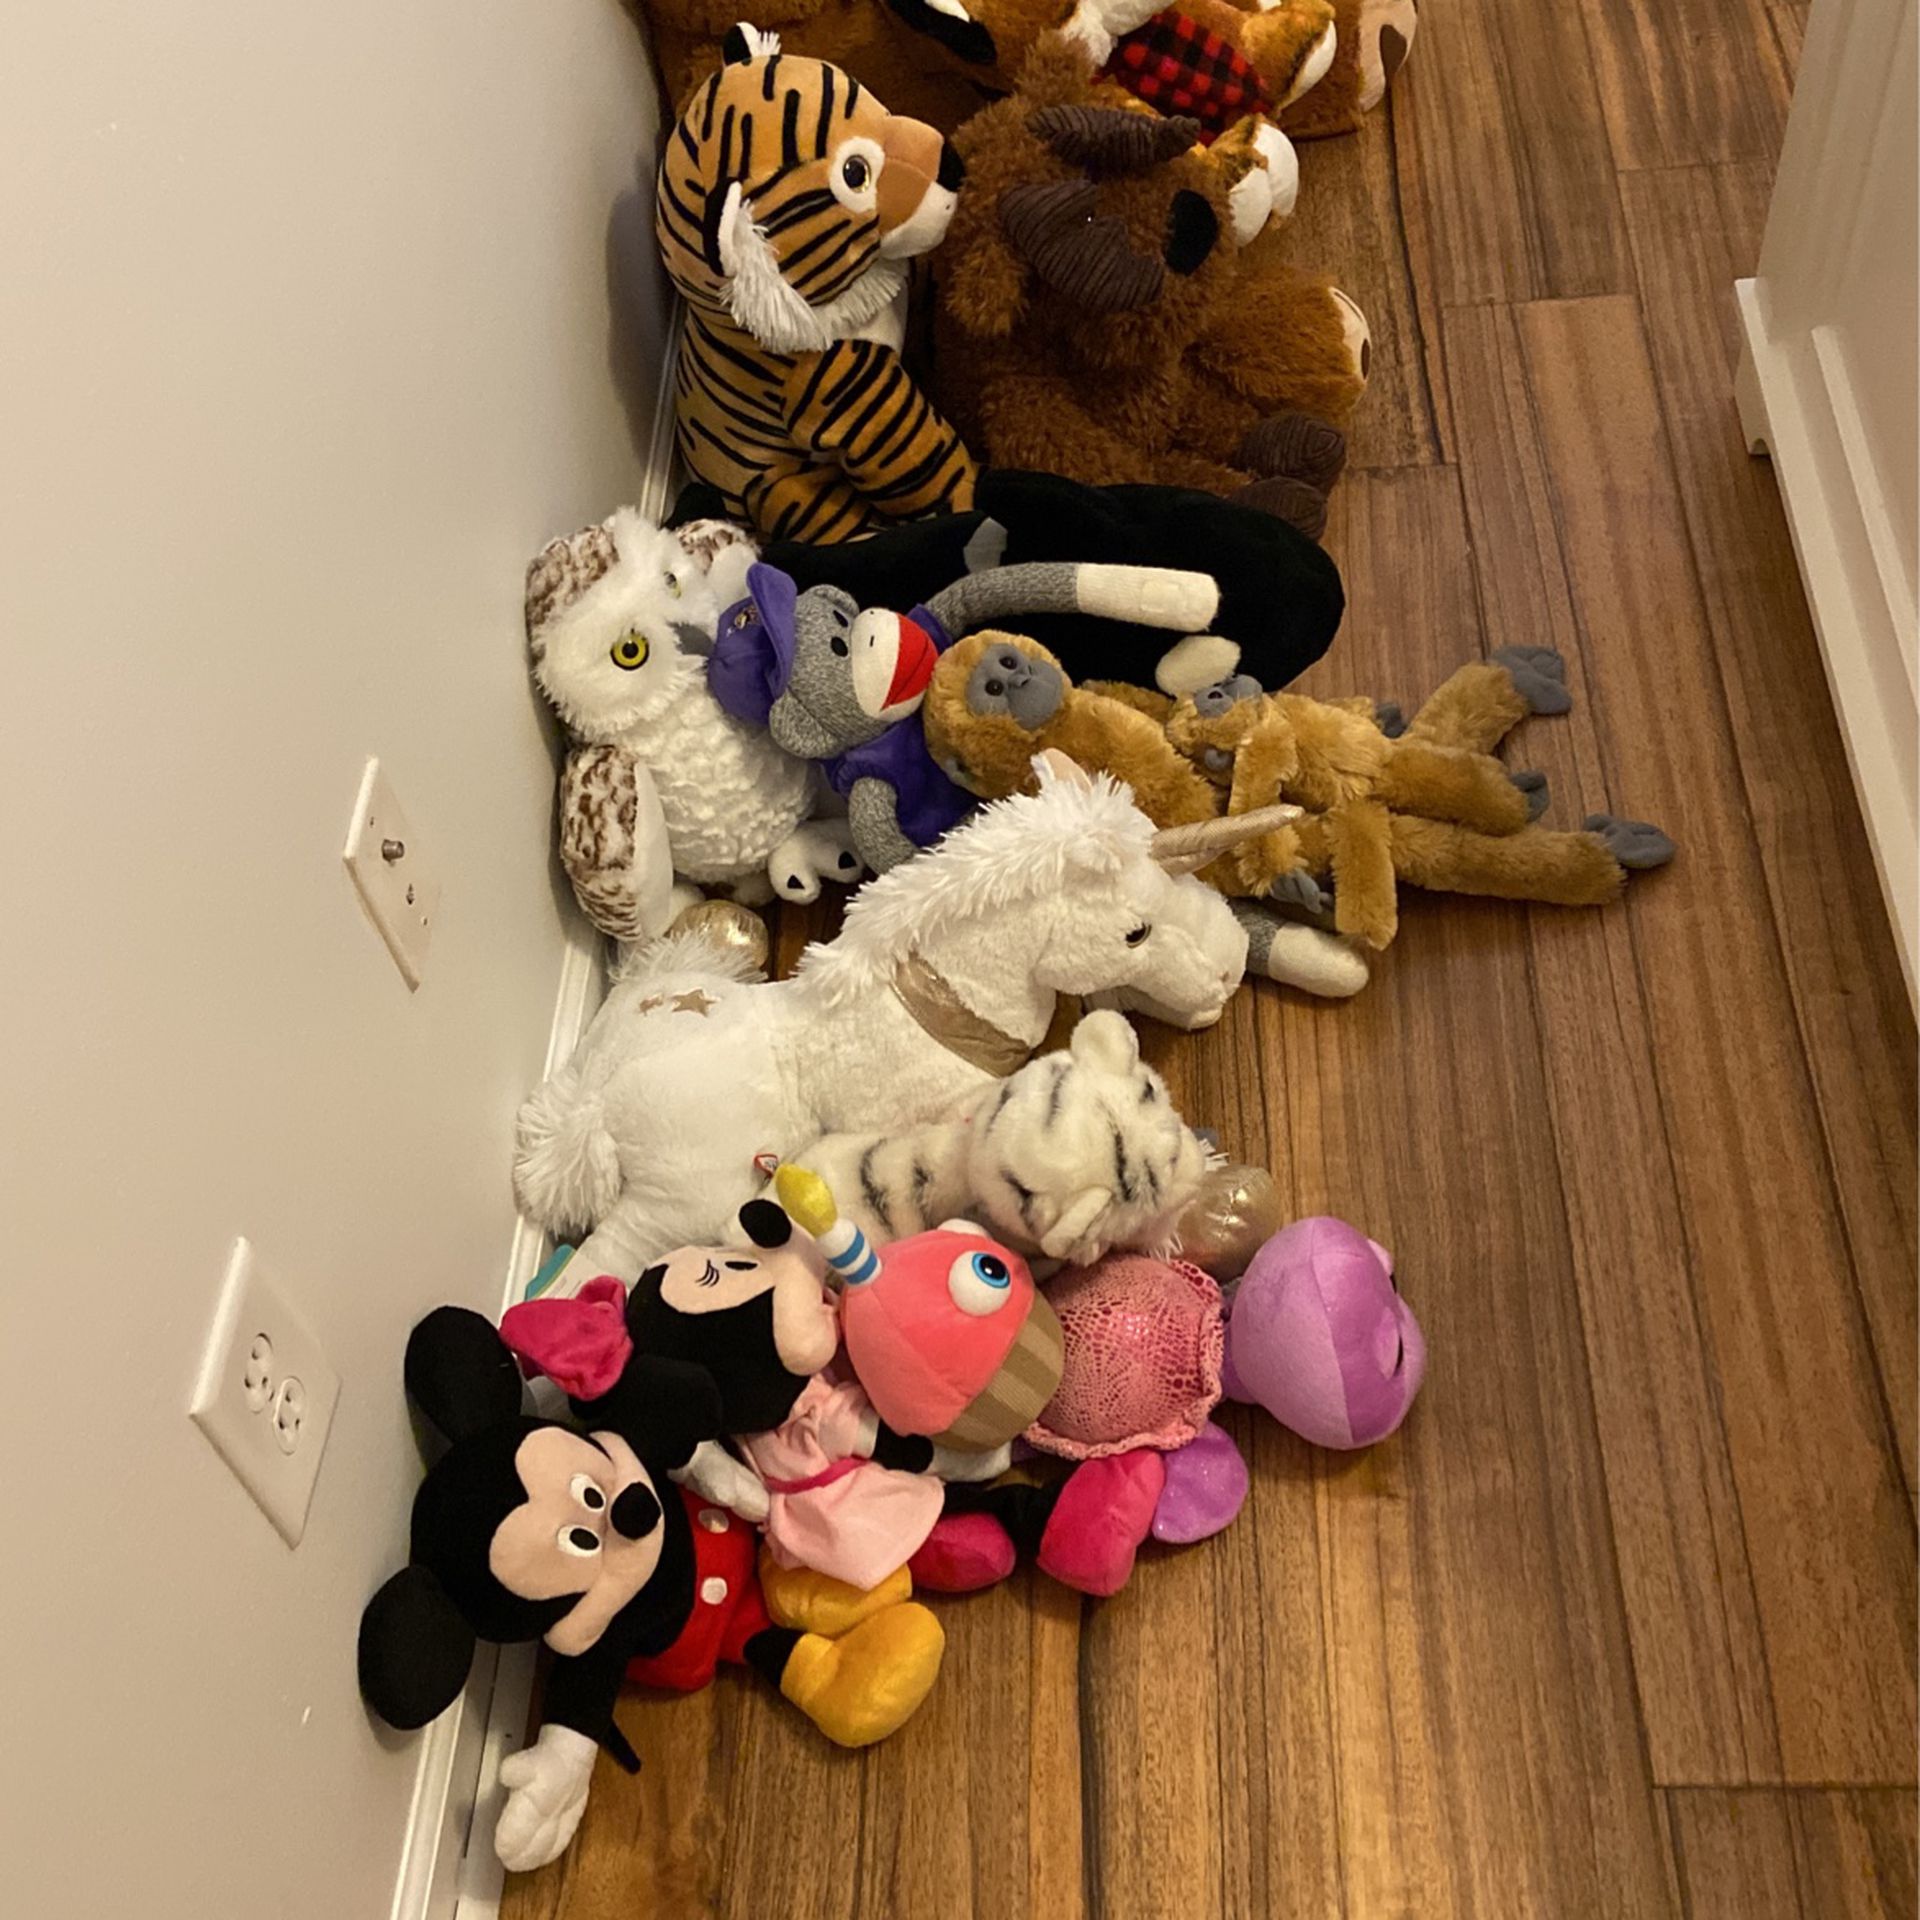 Assorted Plush Toys Stuffed Animals